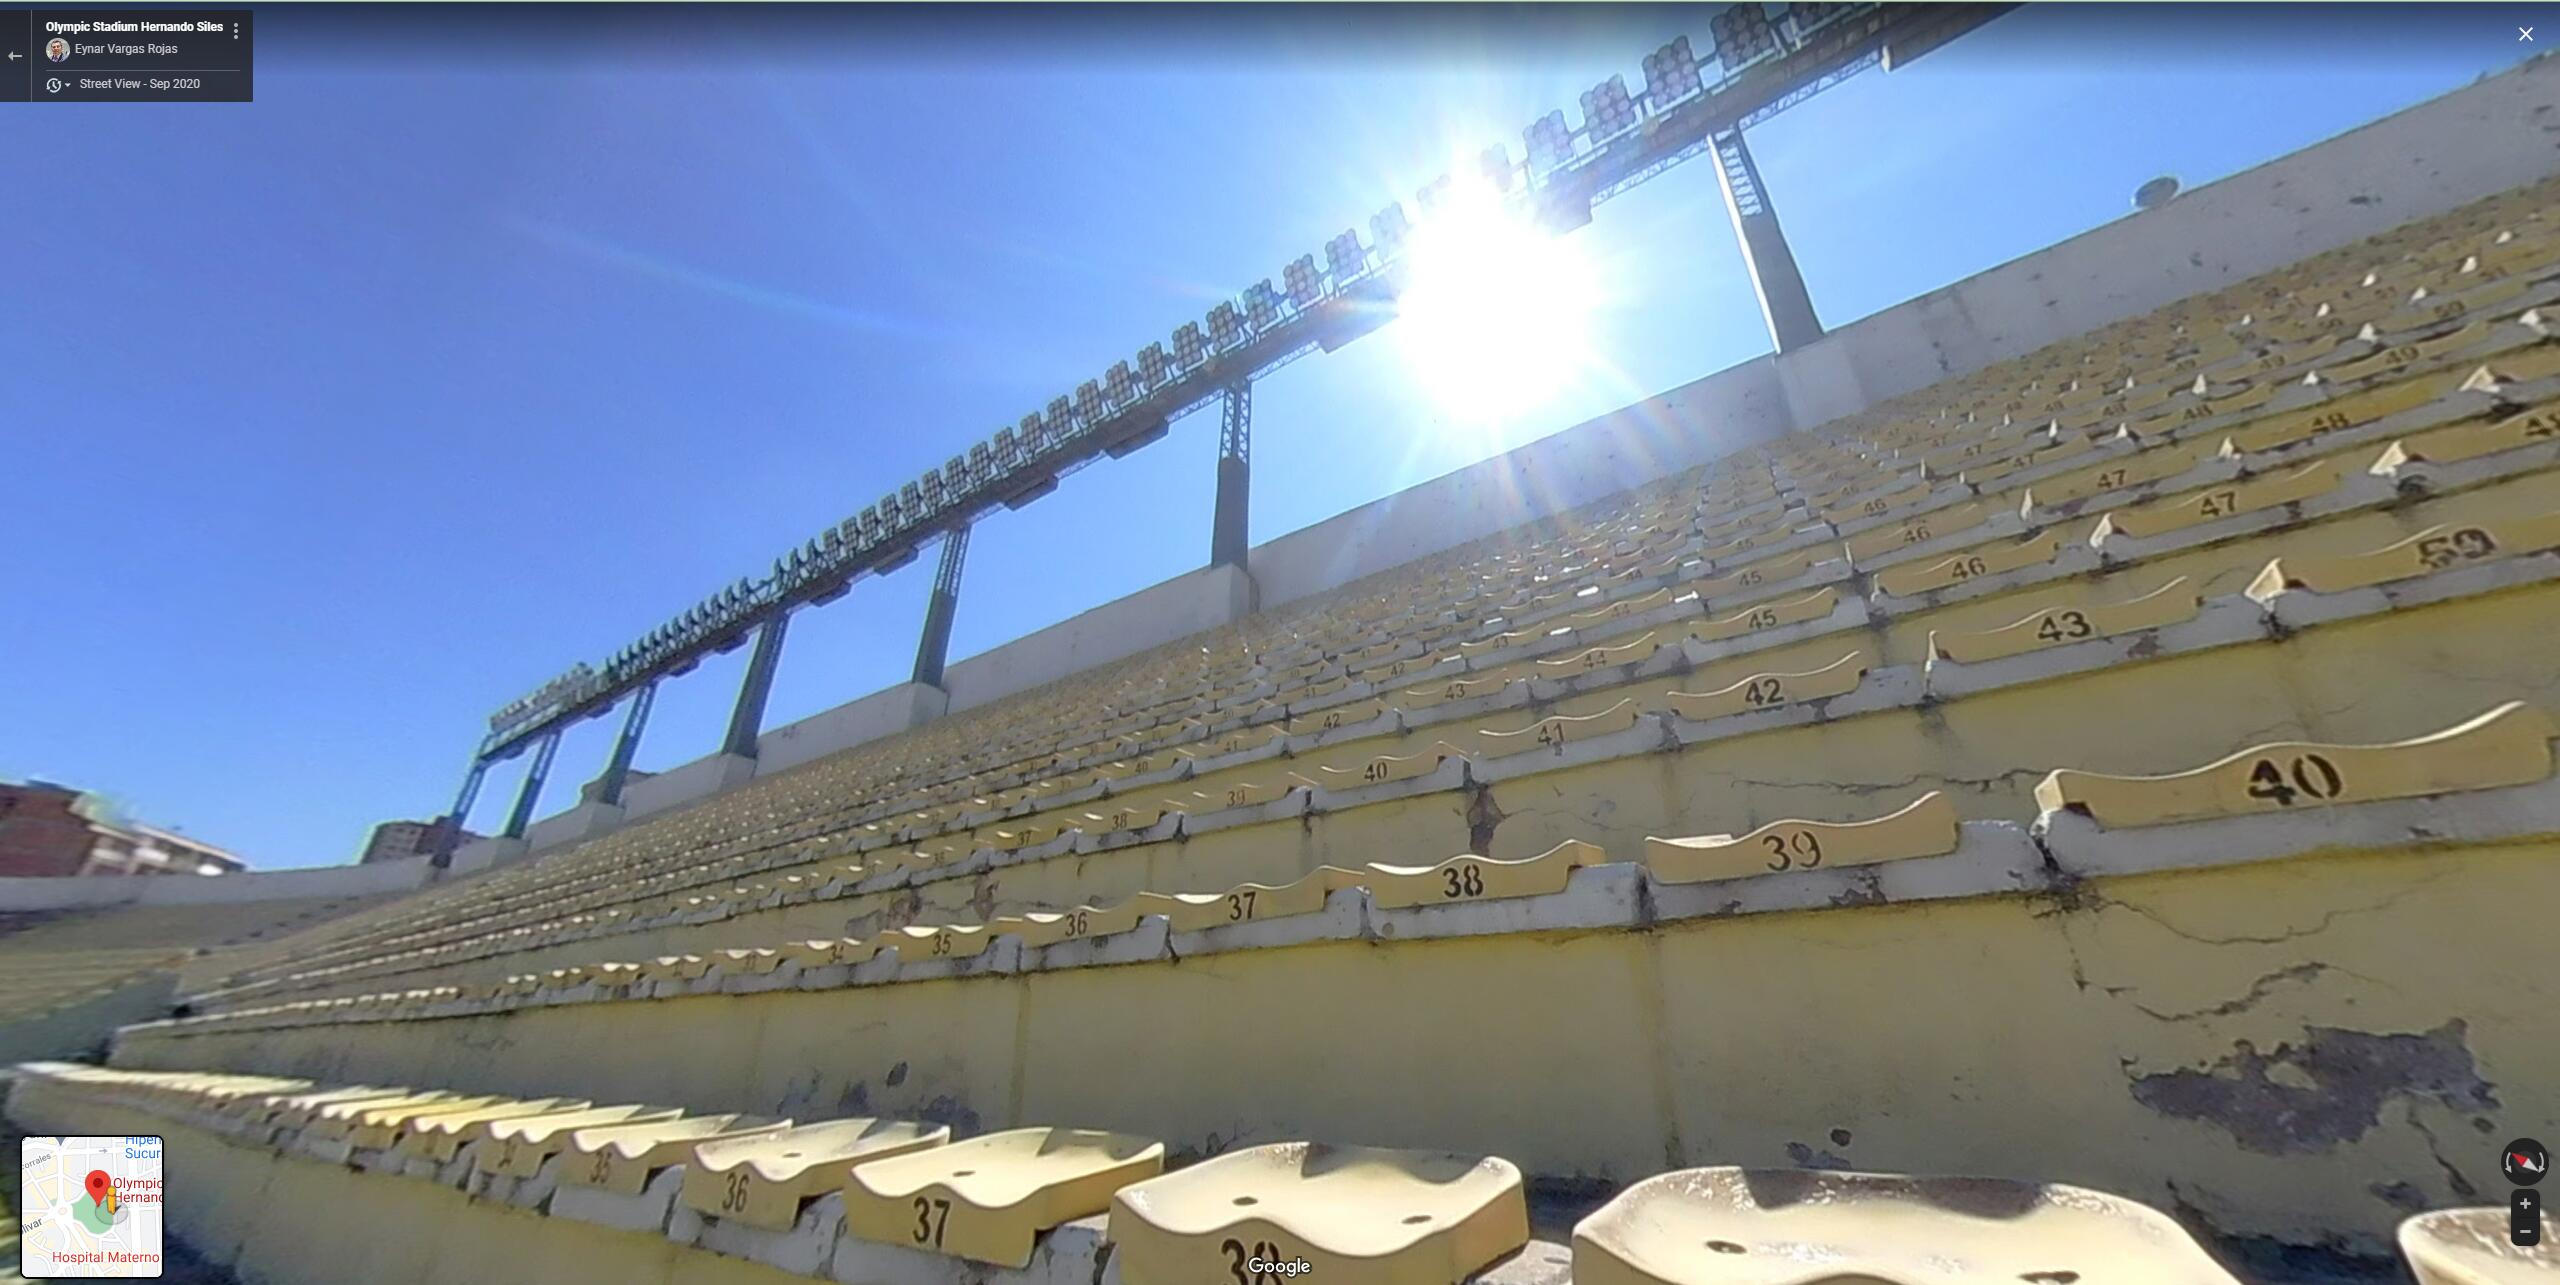 international stadium court in Bolivia